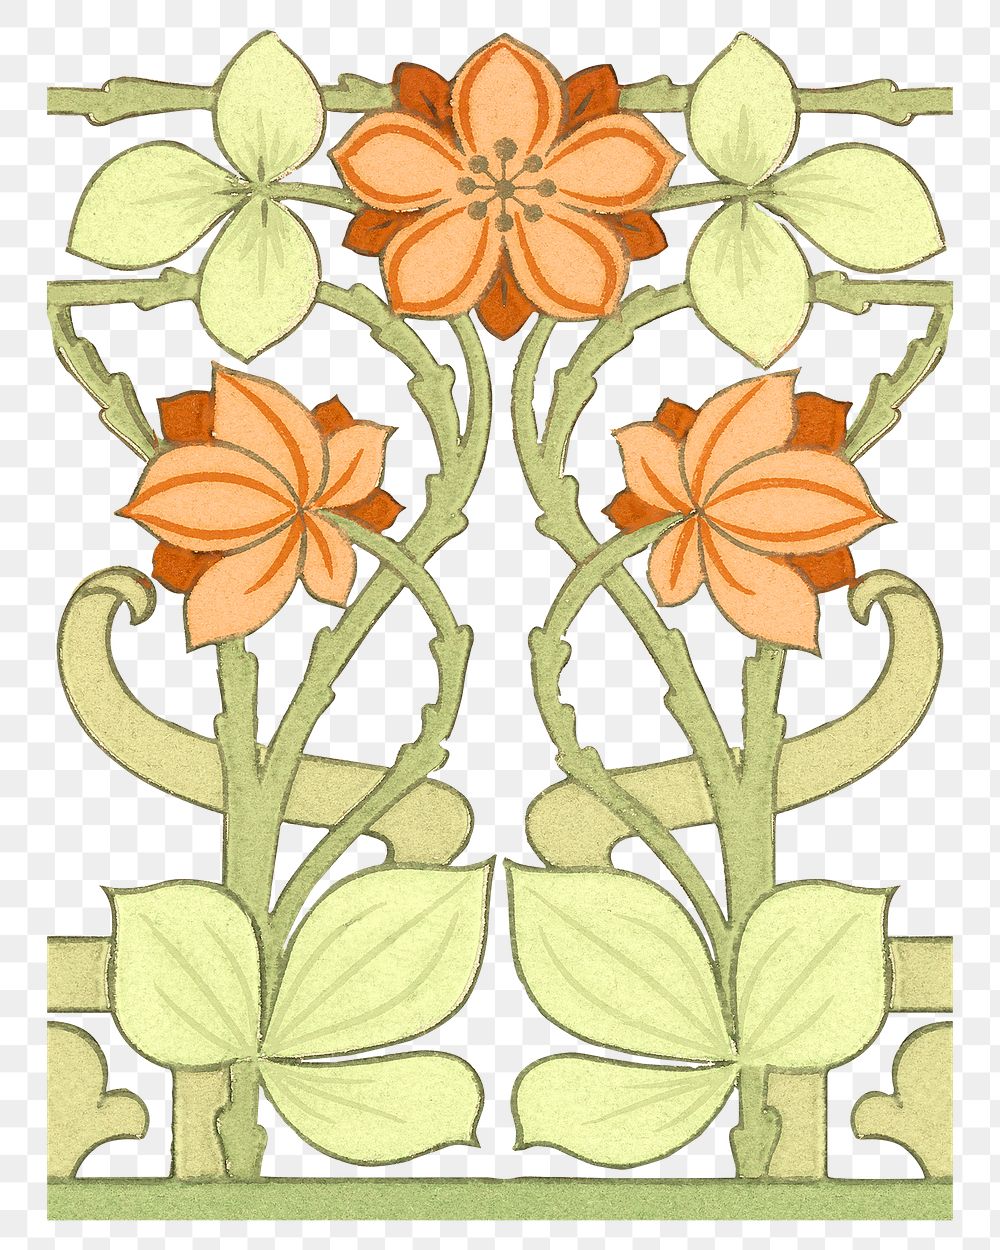 Orange flower png botanical sticker, transparent background, remixed by rawpixel